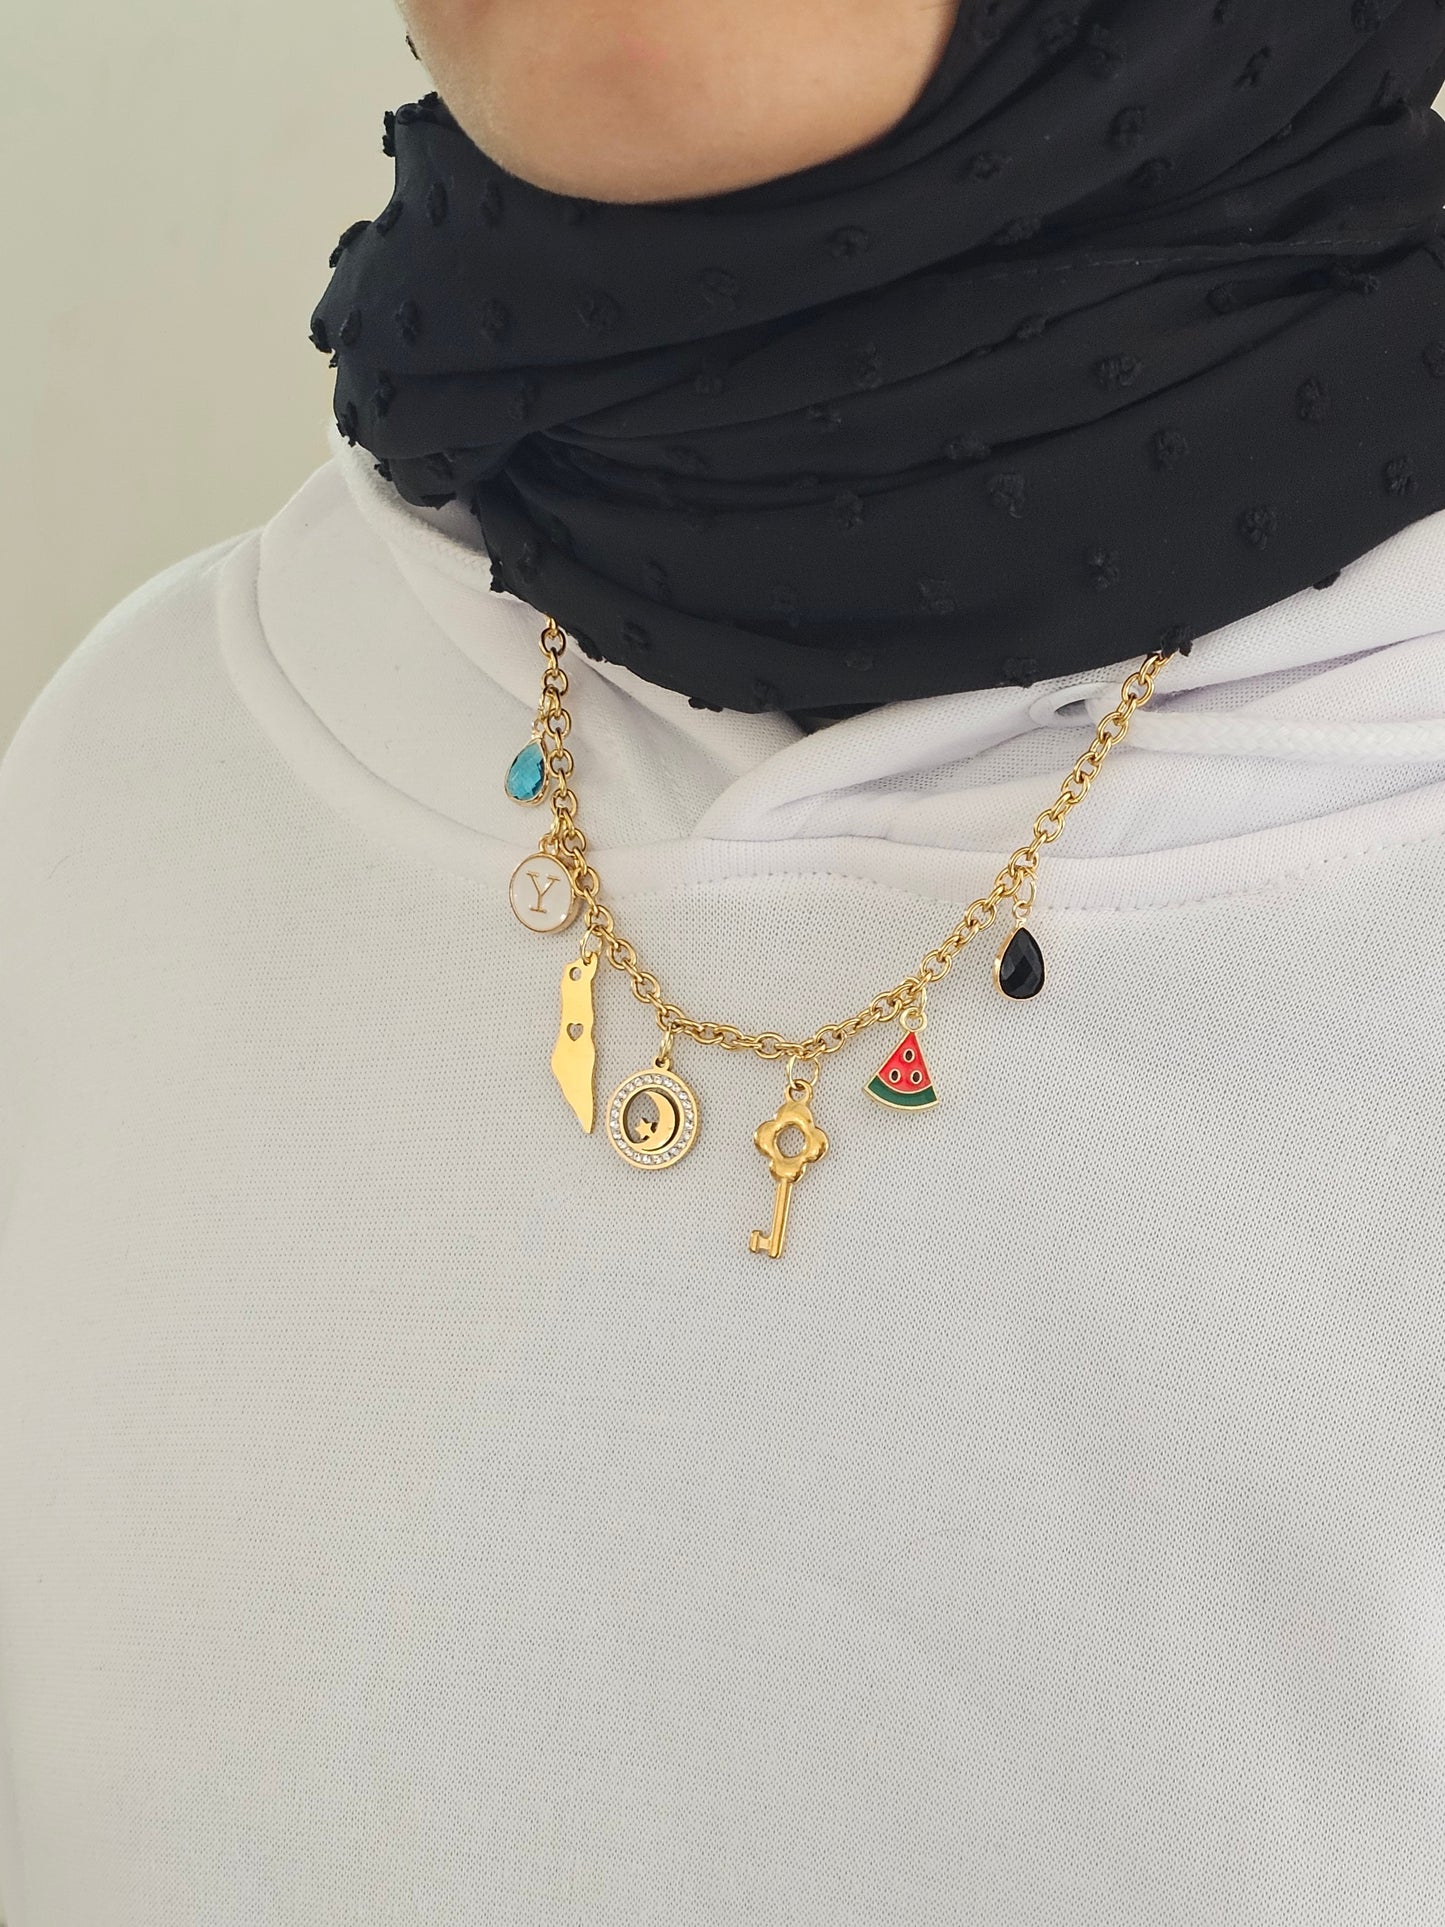 Palestine charm necklace